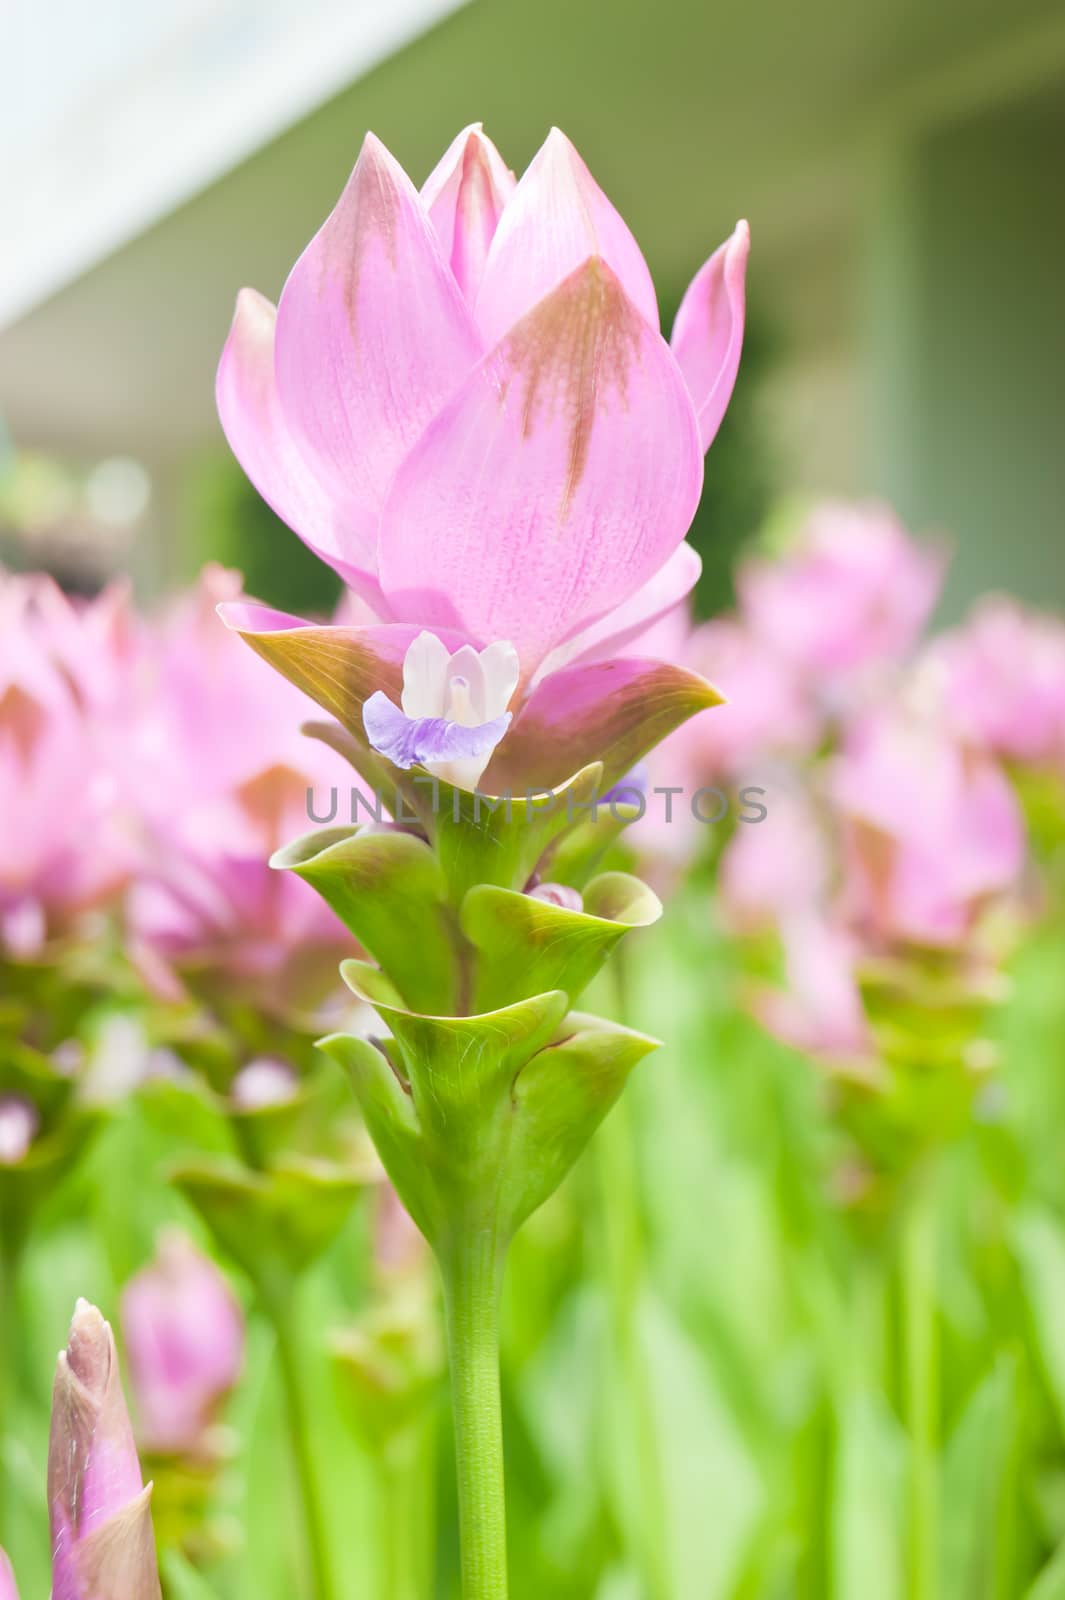 dork krajeaw is the famous flower of chaiyaphum province, thailand.
(Curcuma  aeruqinosa Roxb. Curcuma, Zingiberaceae)